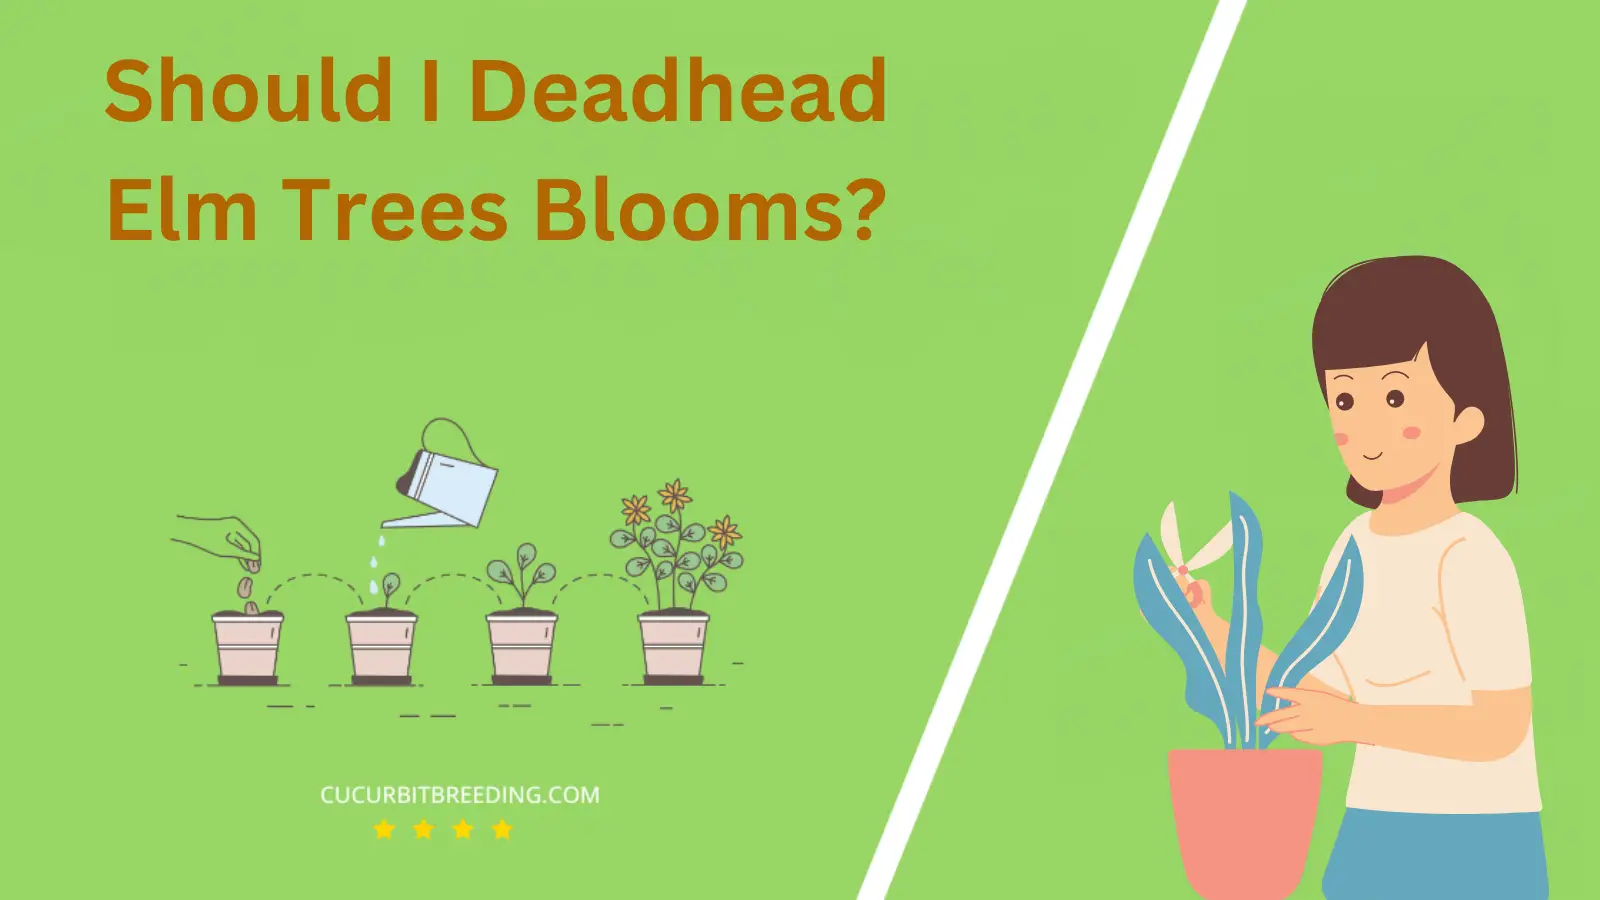 Should I Deadhead Elm Trees Blooms?